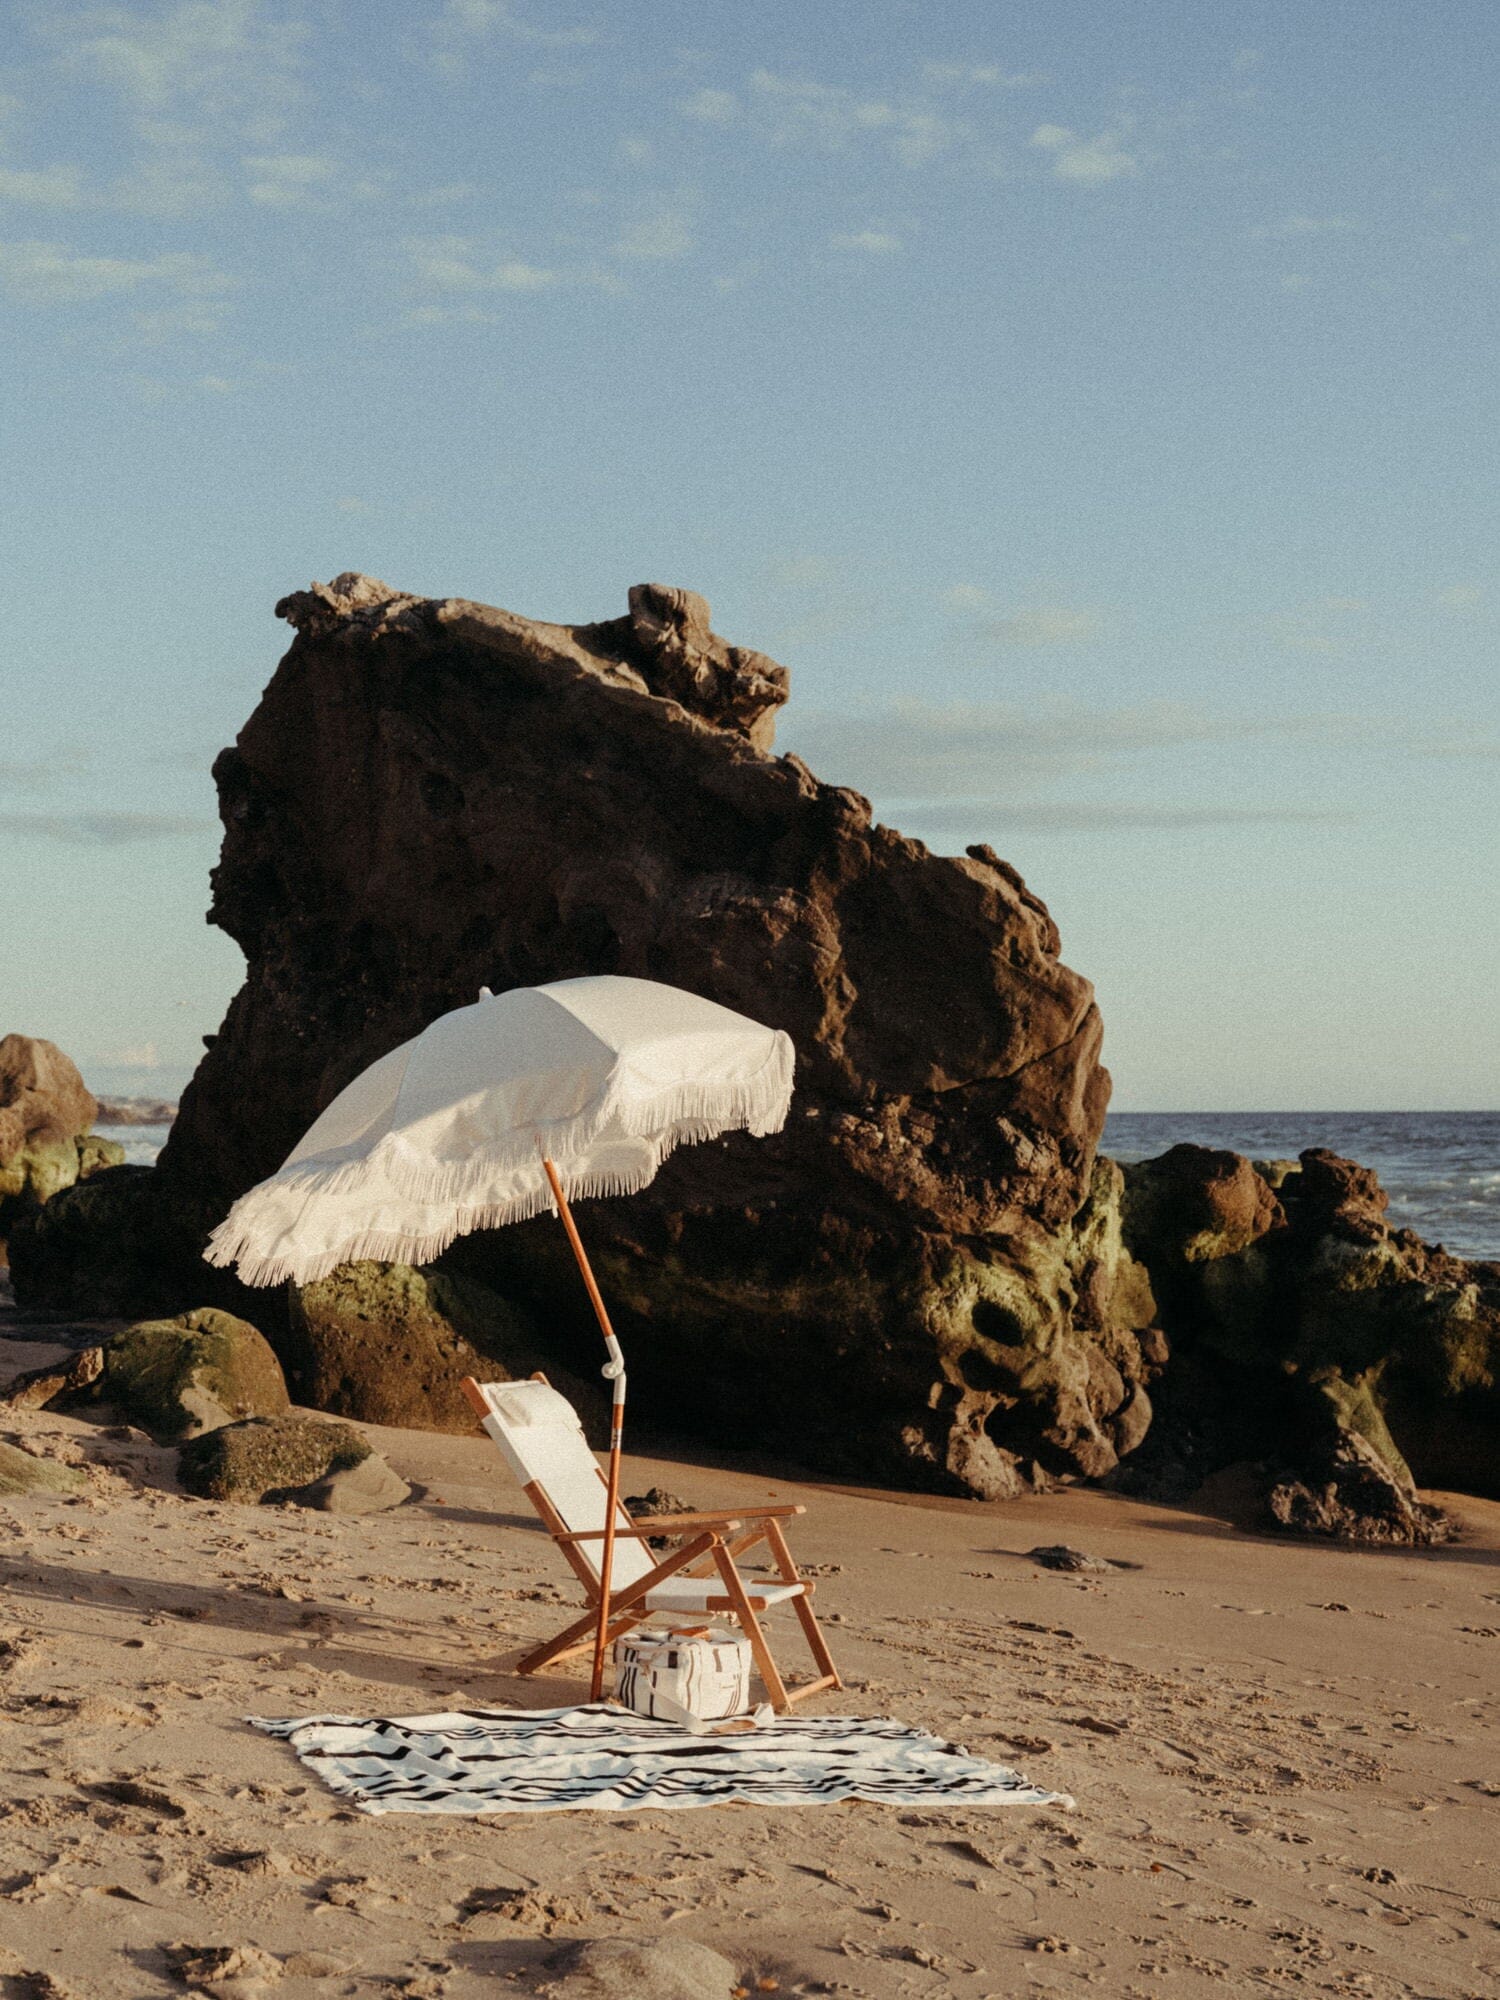 The Holiday Beach Umbrella - Antique White Holiday Umbrella Business & Pleasure Co 